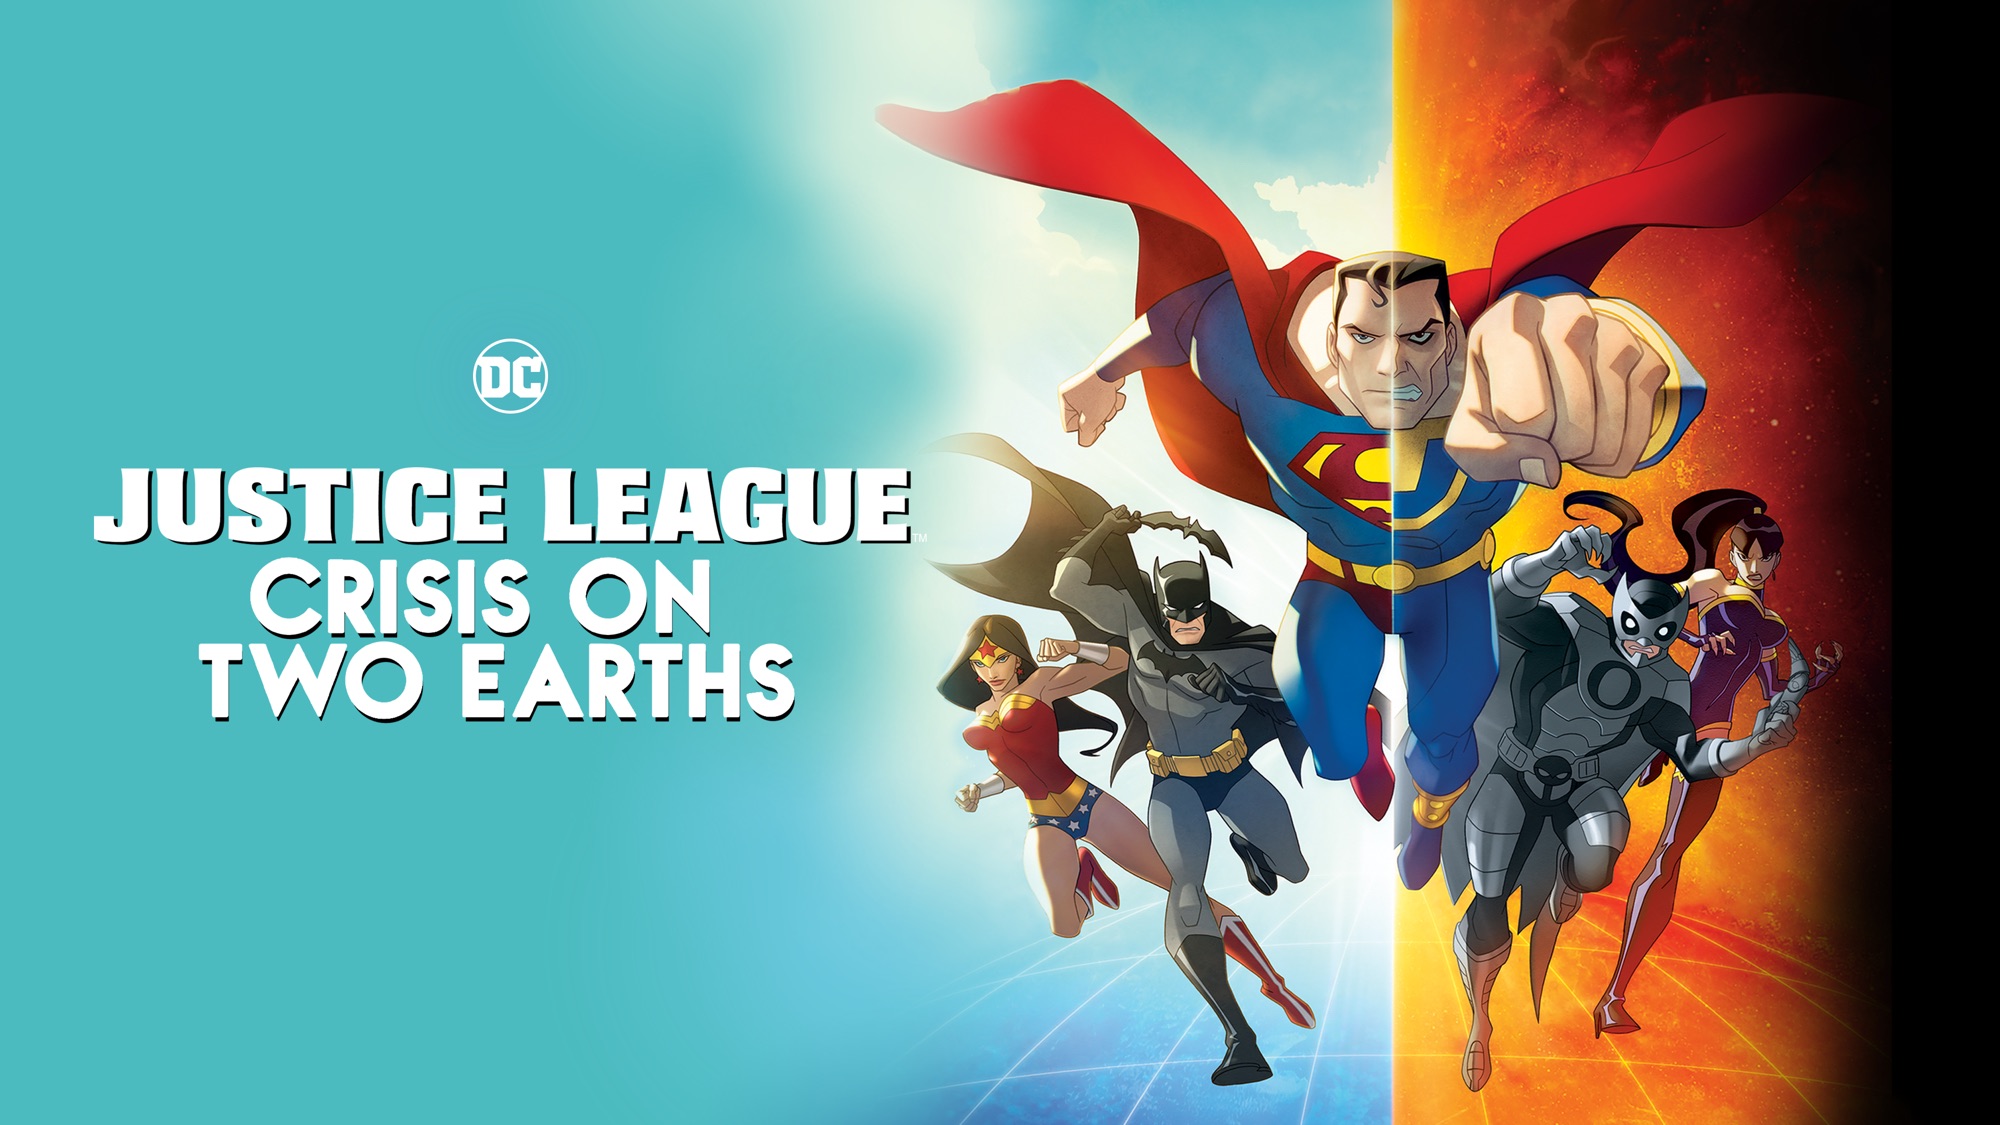 movie, justice league: crisis on two earths, batman, owlman (dc comics), superman, superwoman, ultraman (dc comics), wonder woman, justice league